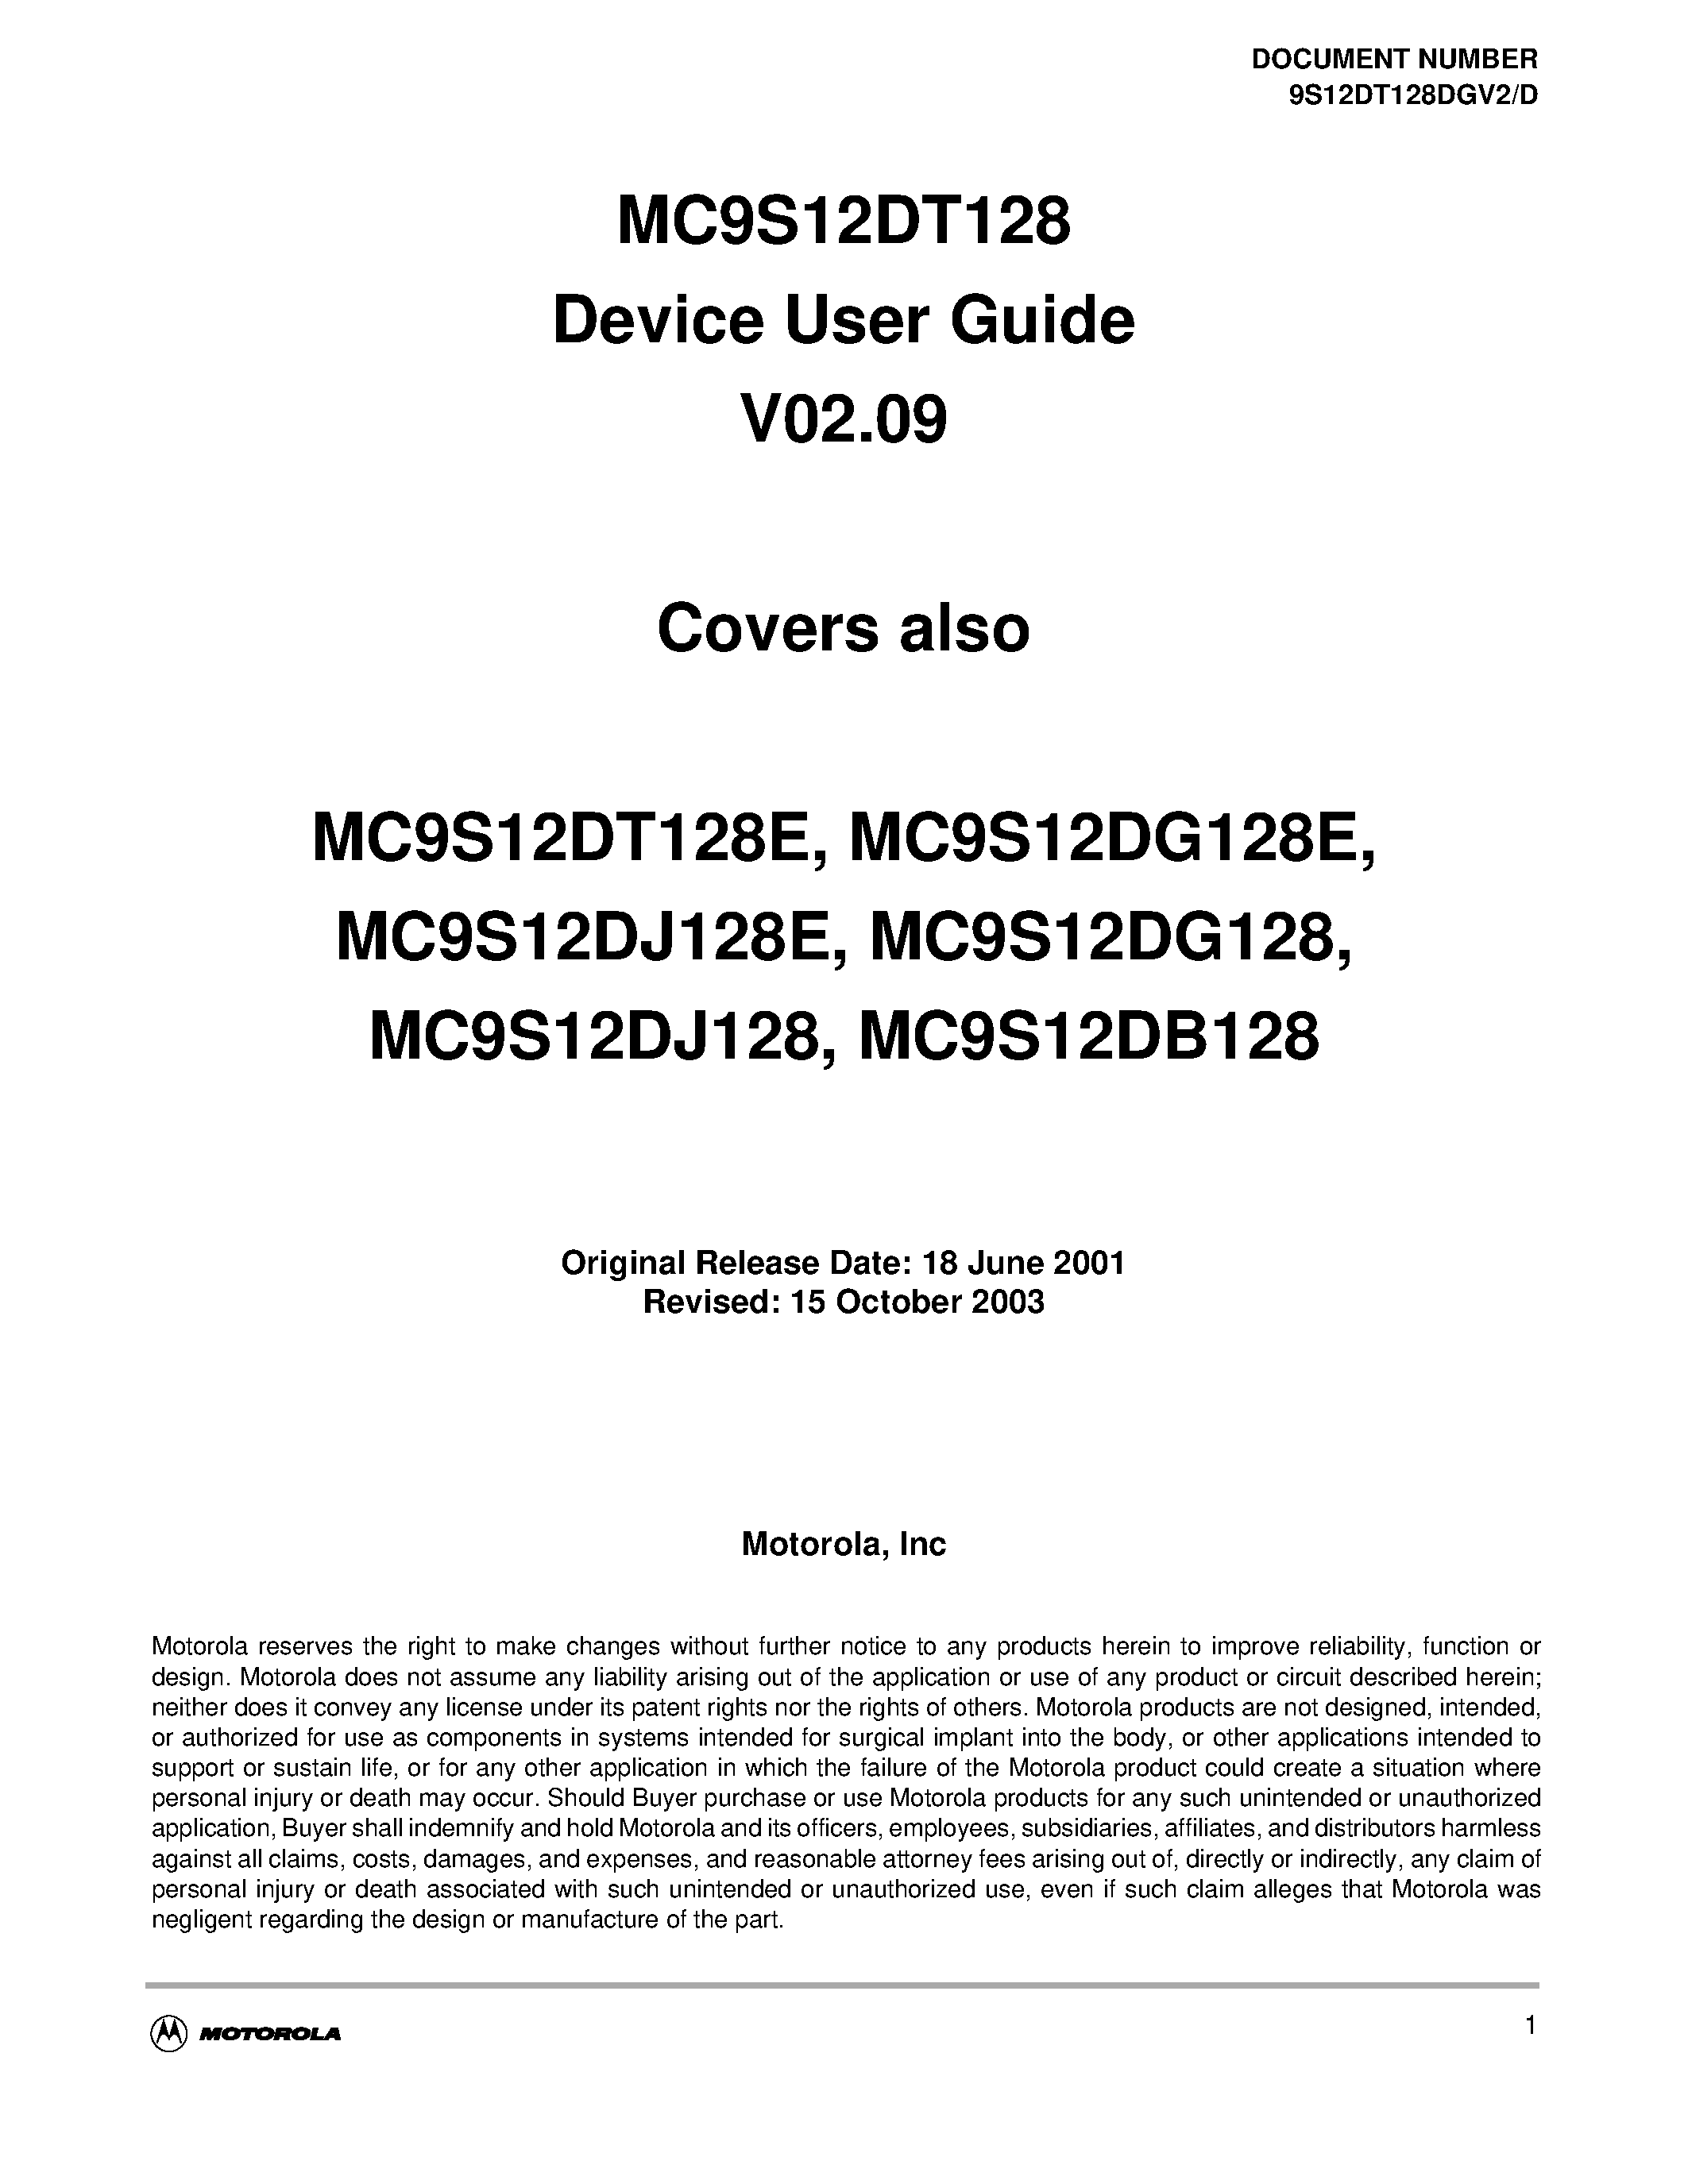 Даташит S12MSCANV2D - MC9S12DT128 Device User Guide V02.09 страница 1